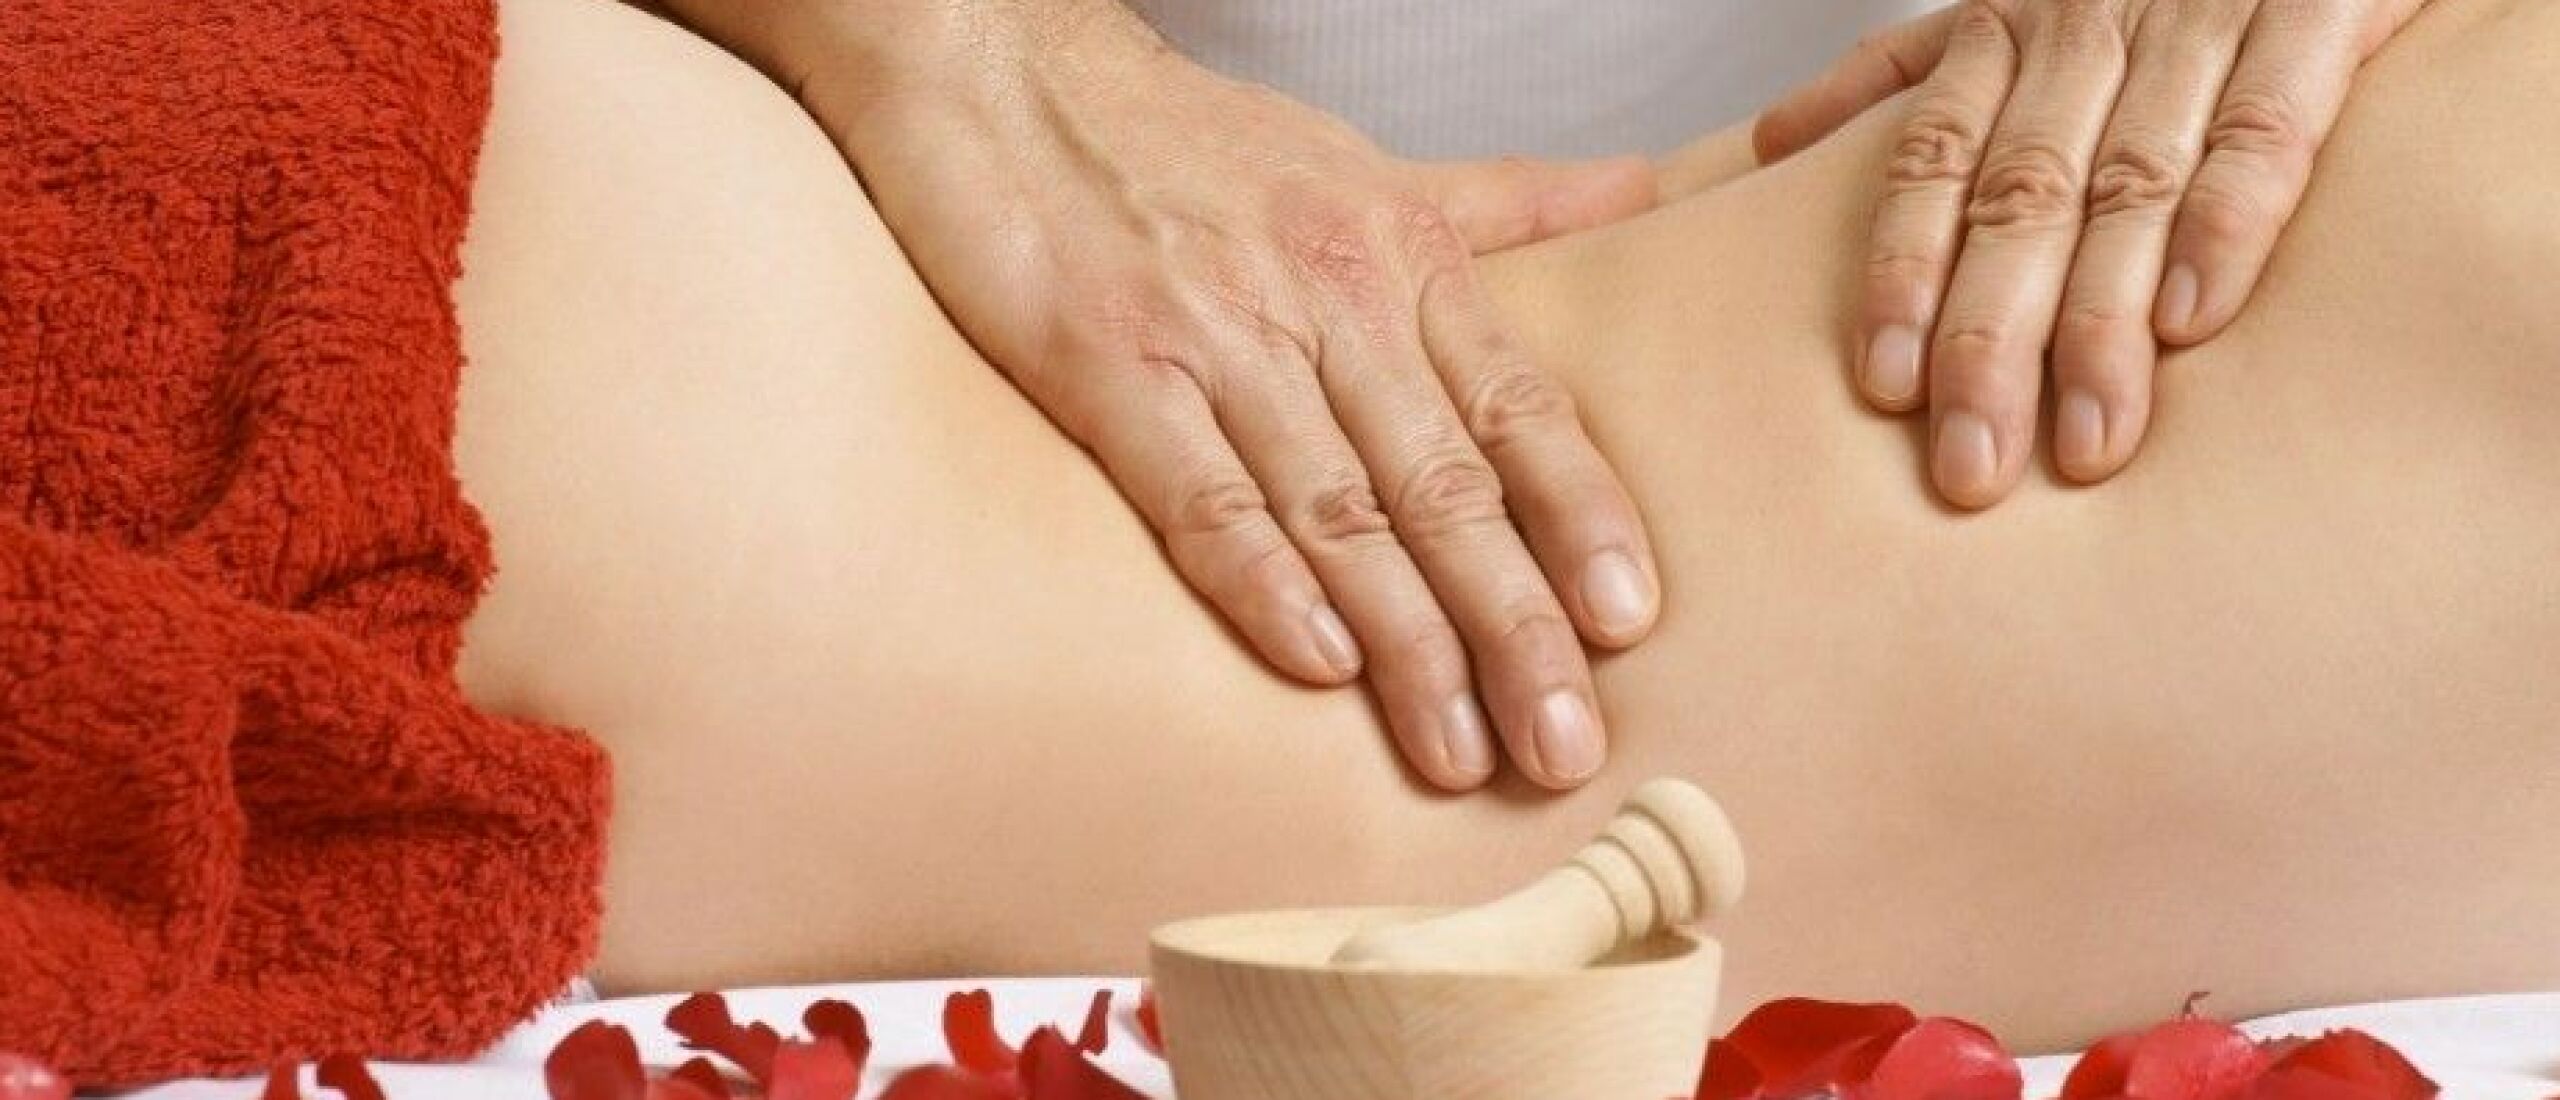 Massagetherapeut worden